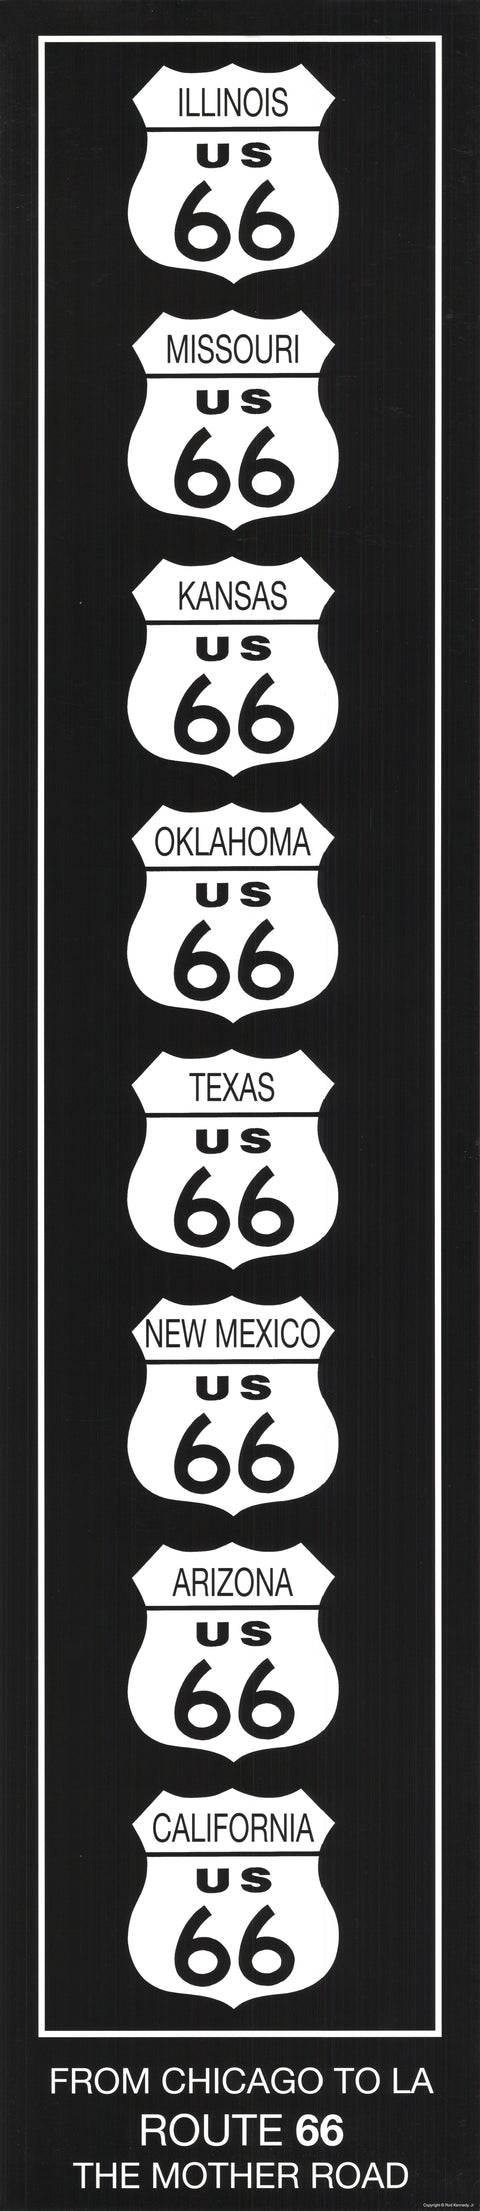 ROD KENNEDY Route 66 (Black & White), 1995